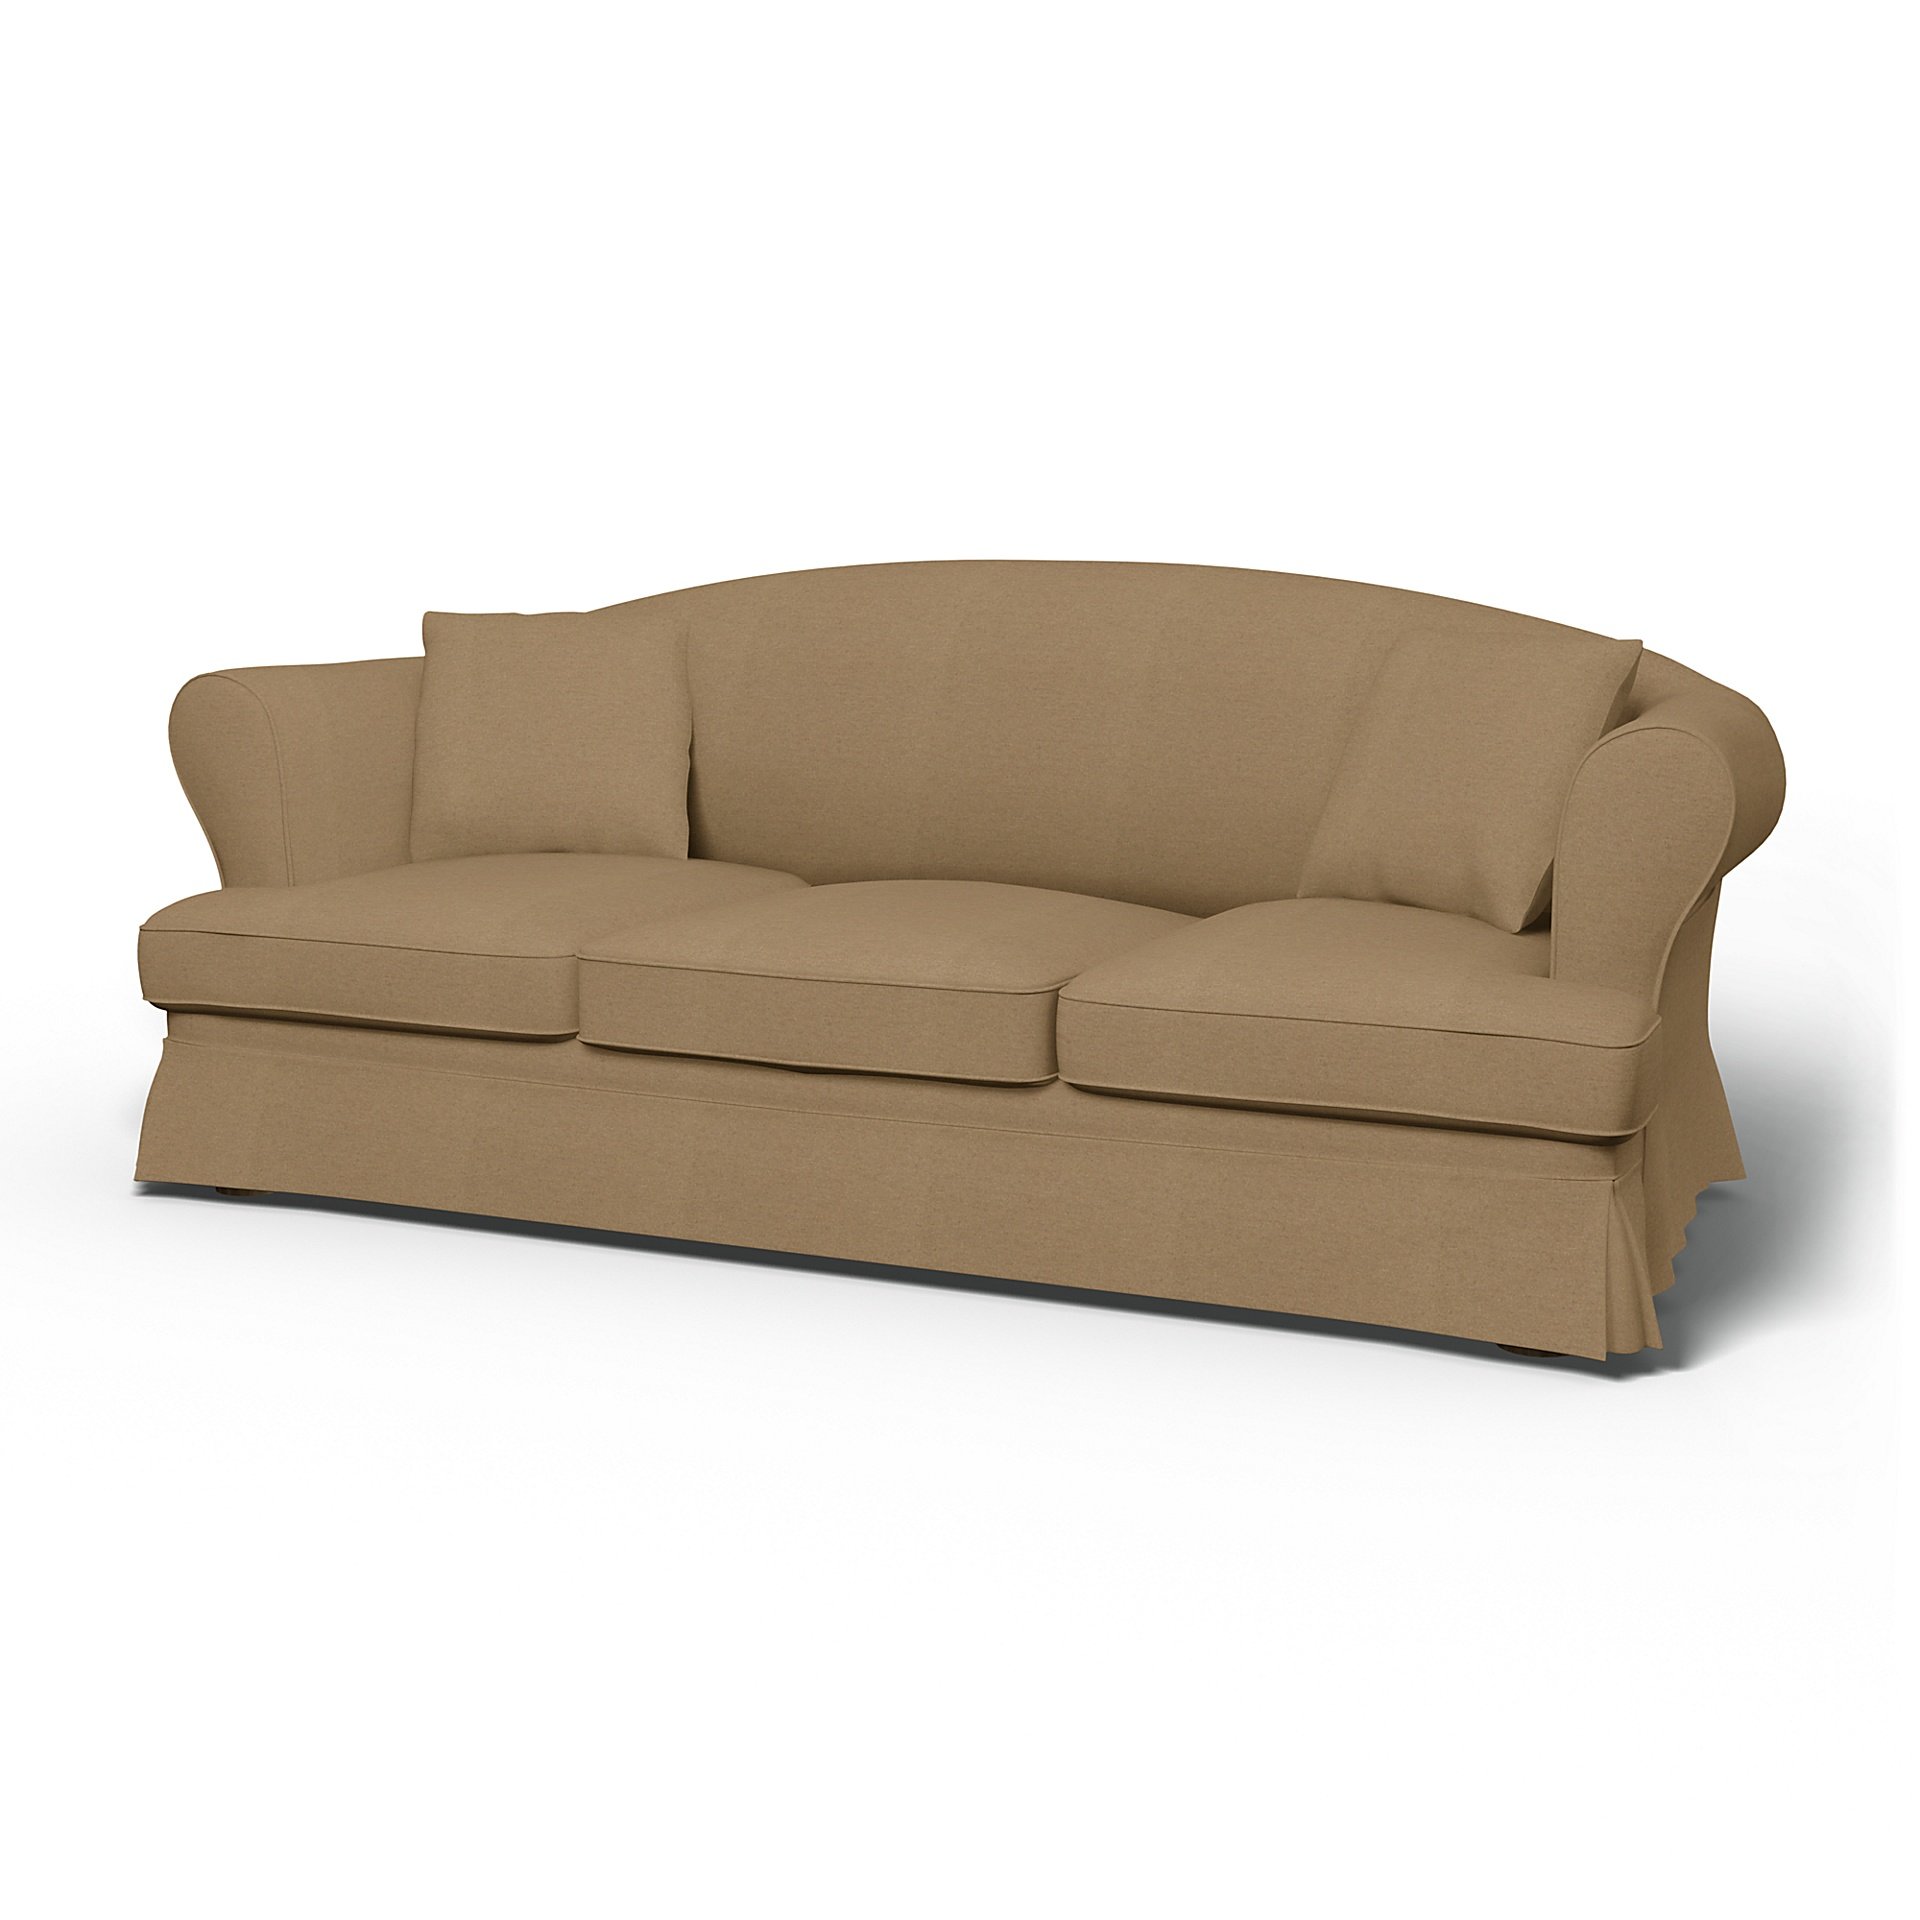 IKEA - Sundborn 3 Seater Sofa Cover, Sand, Wool - Bemz